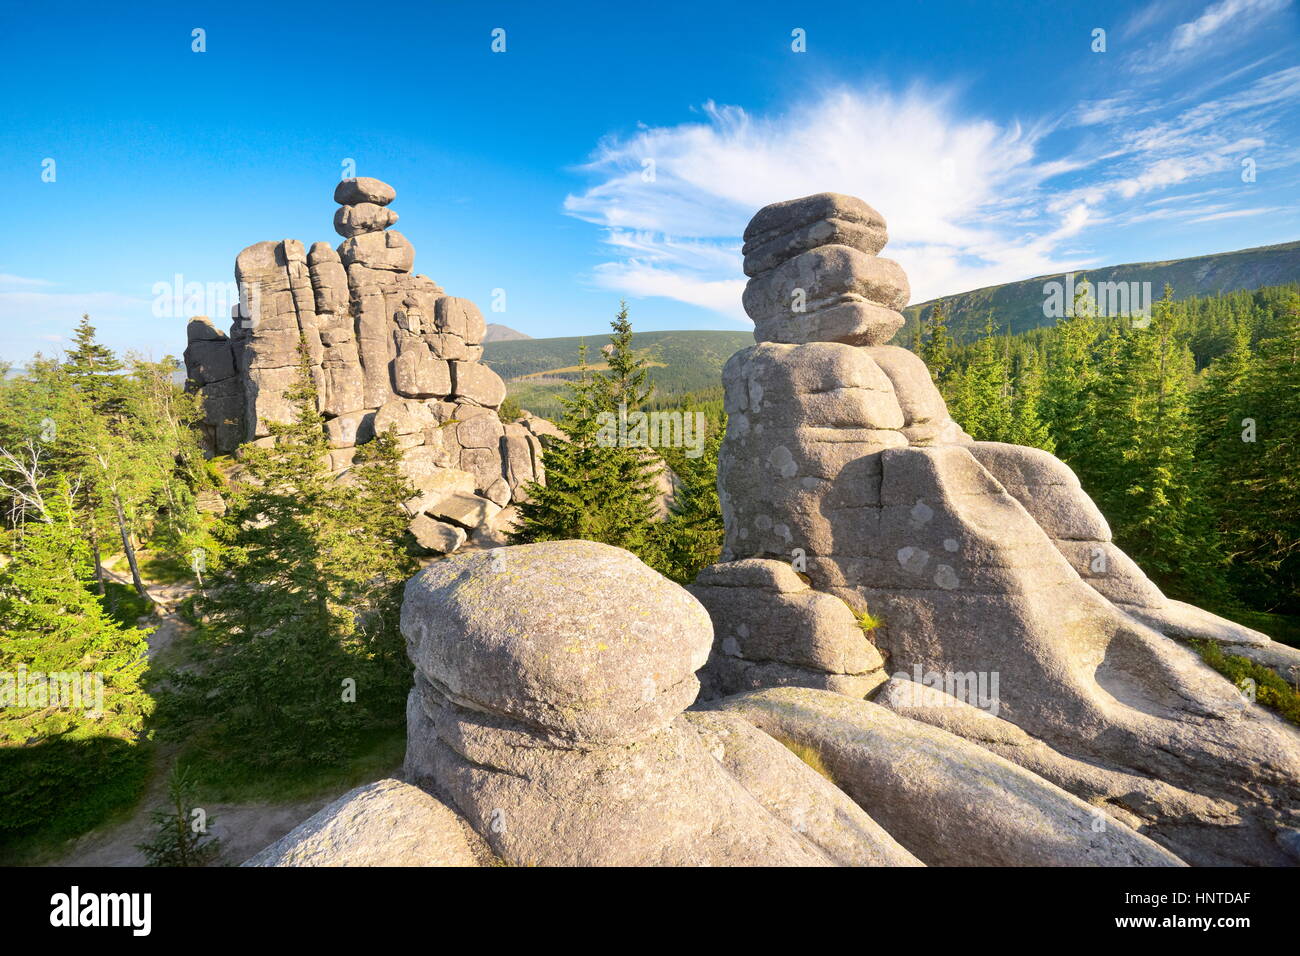 Pielgrzymy, Rock formation in Karkonosze Mountains, National Park, Poland Stock Photo